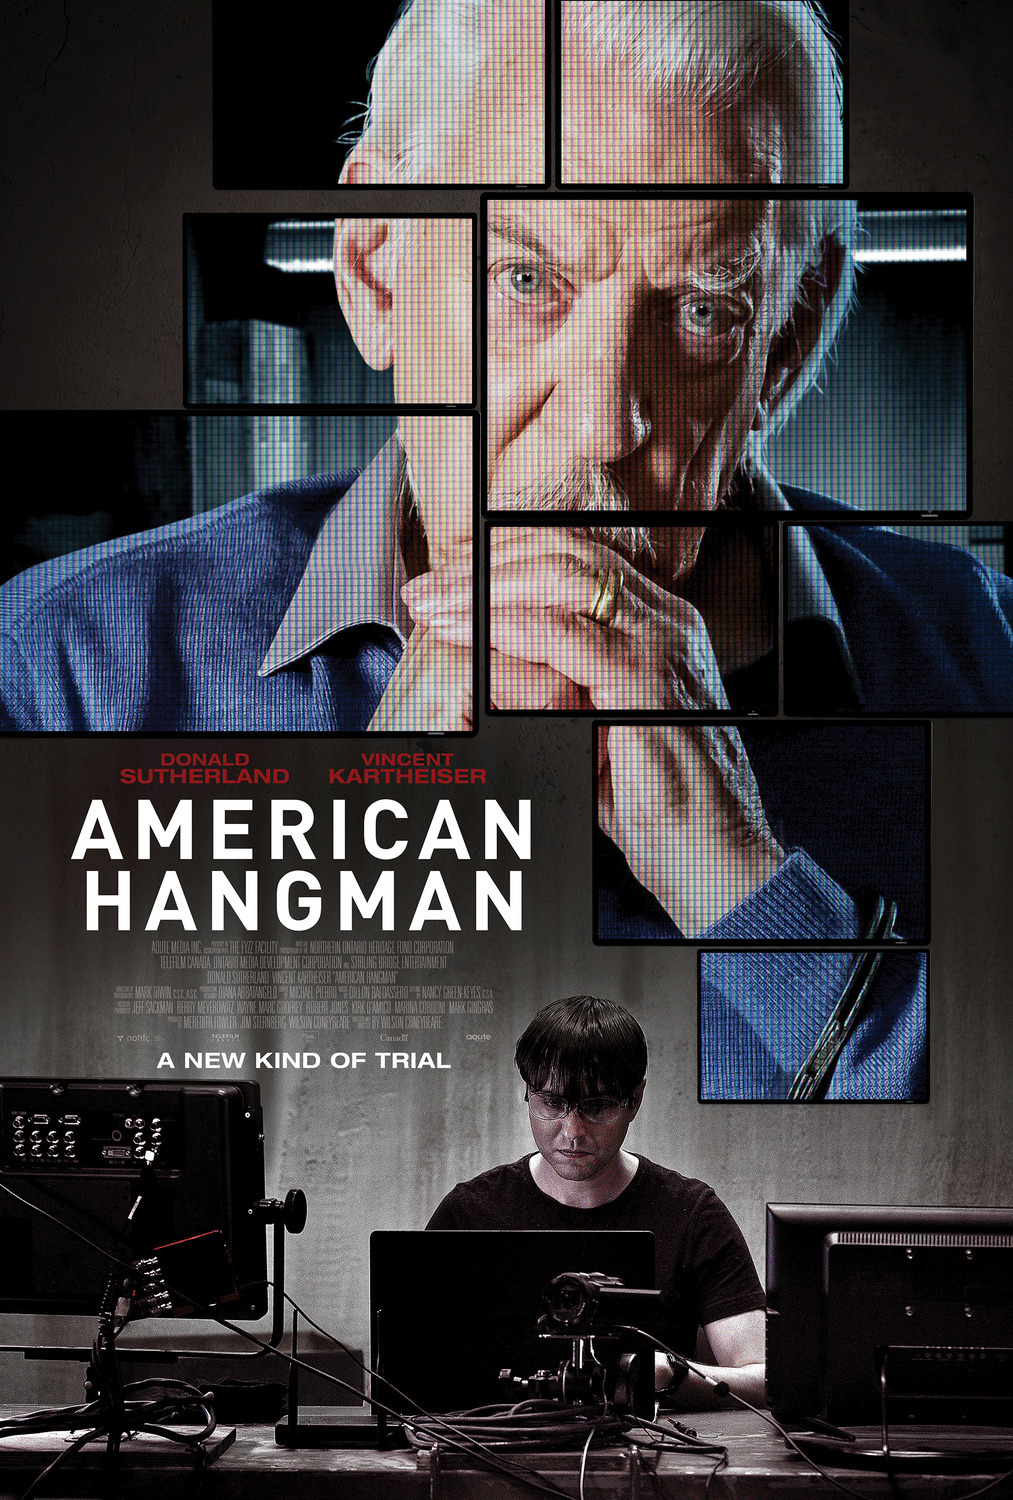 Nonton film American Hangman layarkaca21 indoxx1 ganool online streaming terbaru